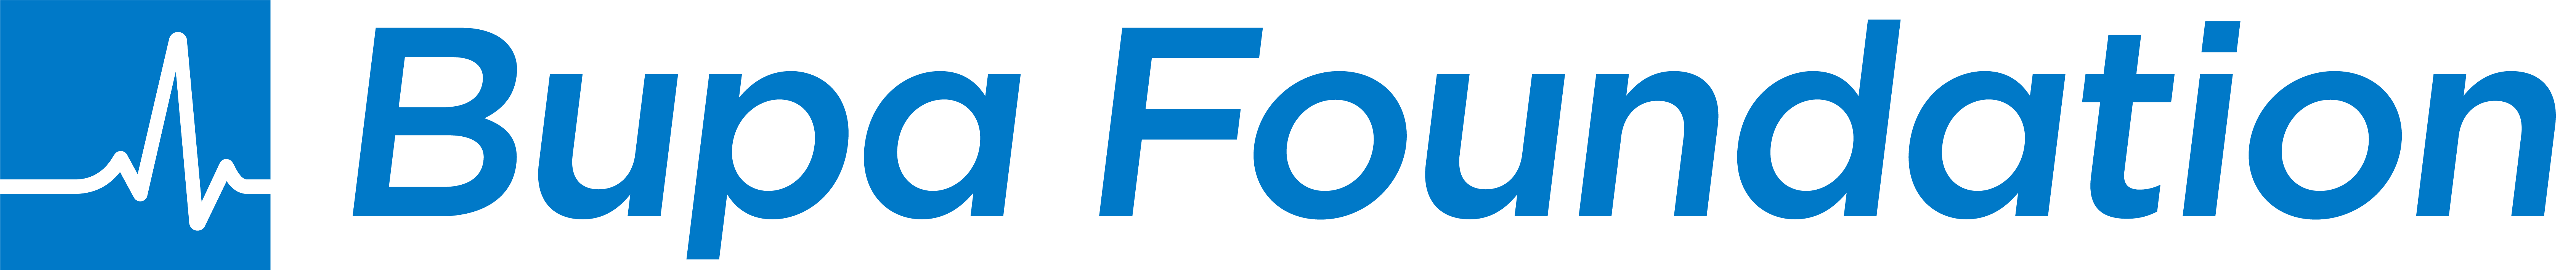 Bupa Foundation logo